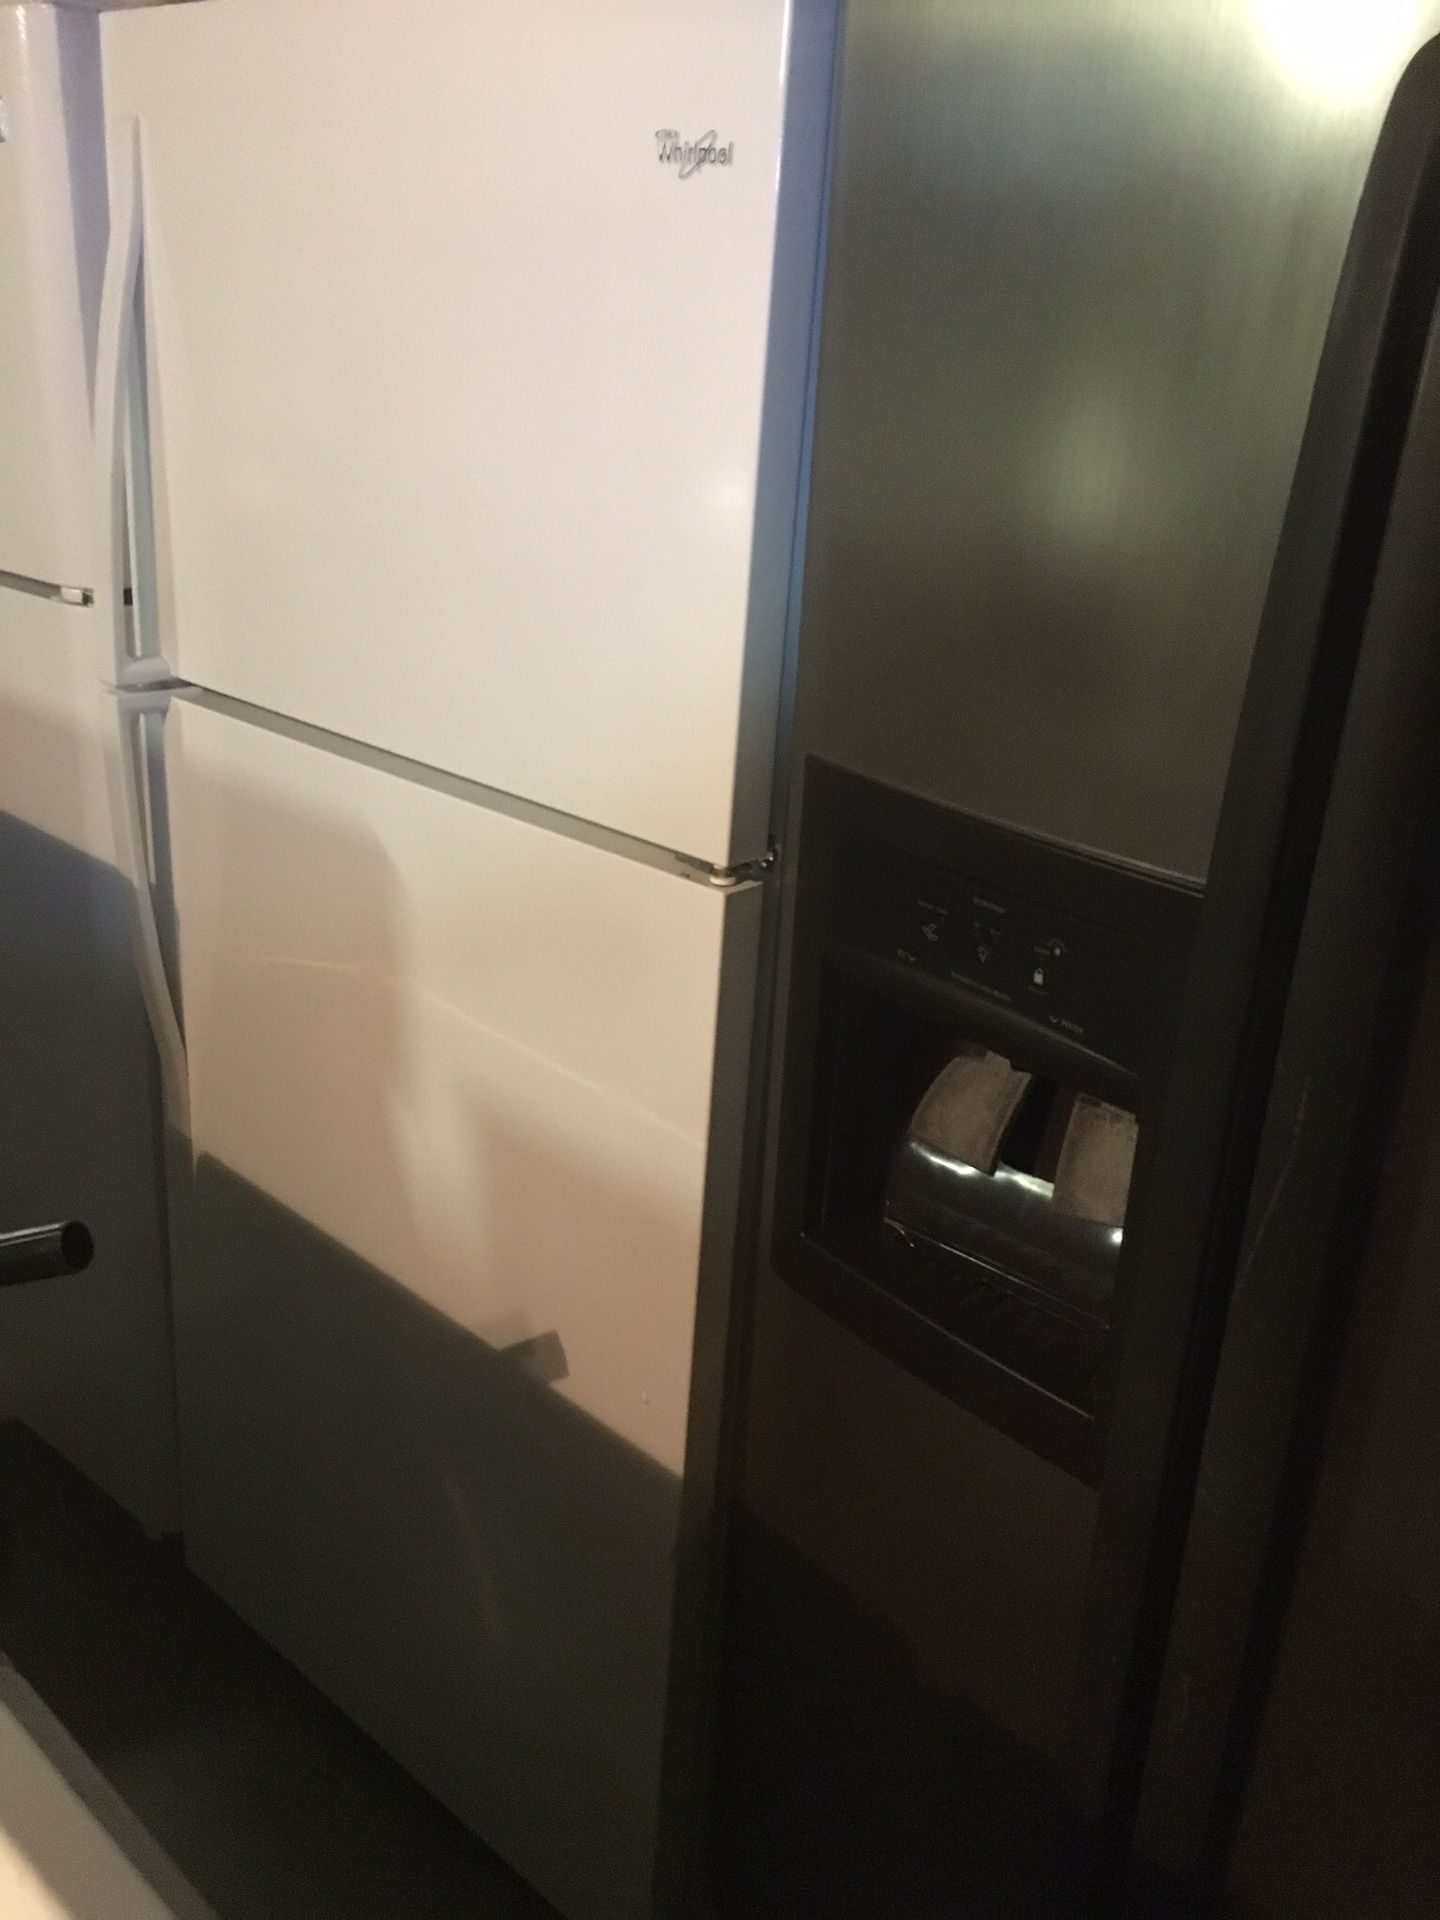 White whirlpool refrigerators/ 33 inch wide/ one year warranty